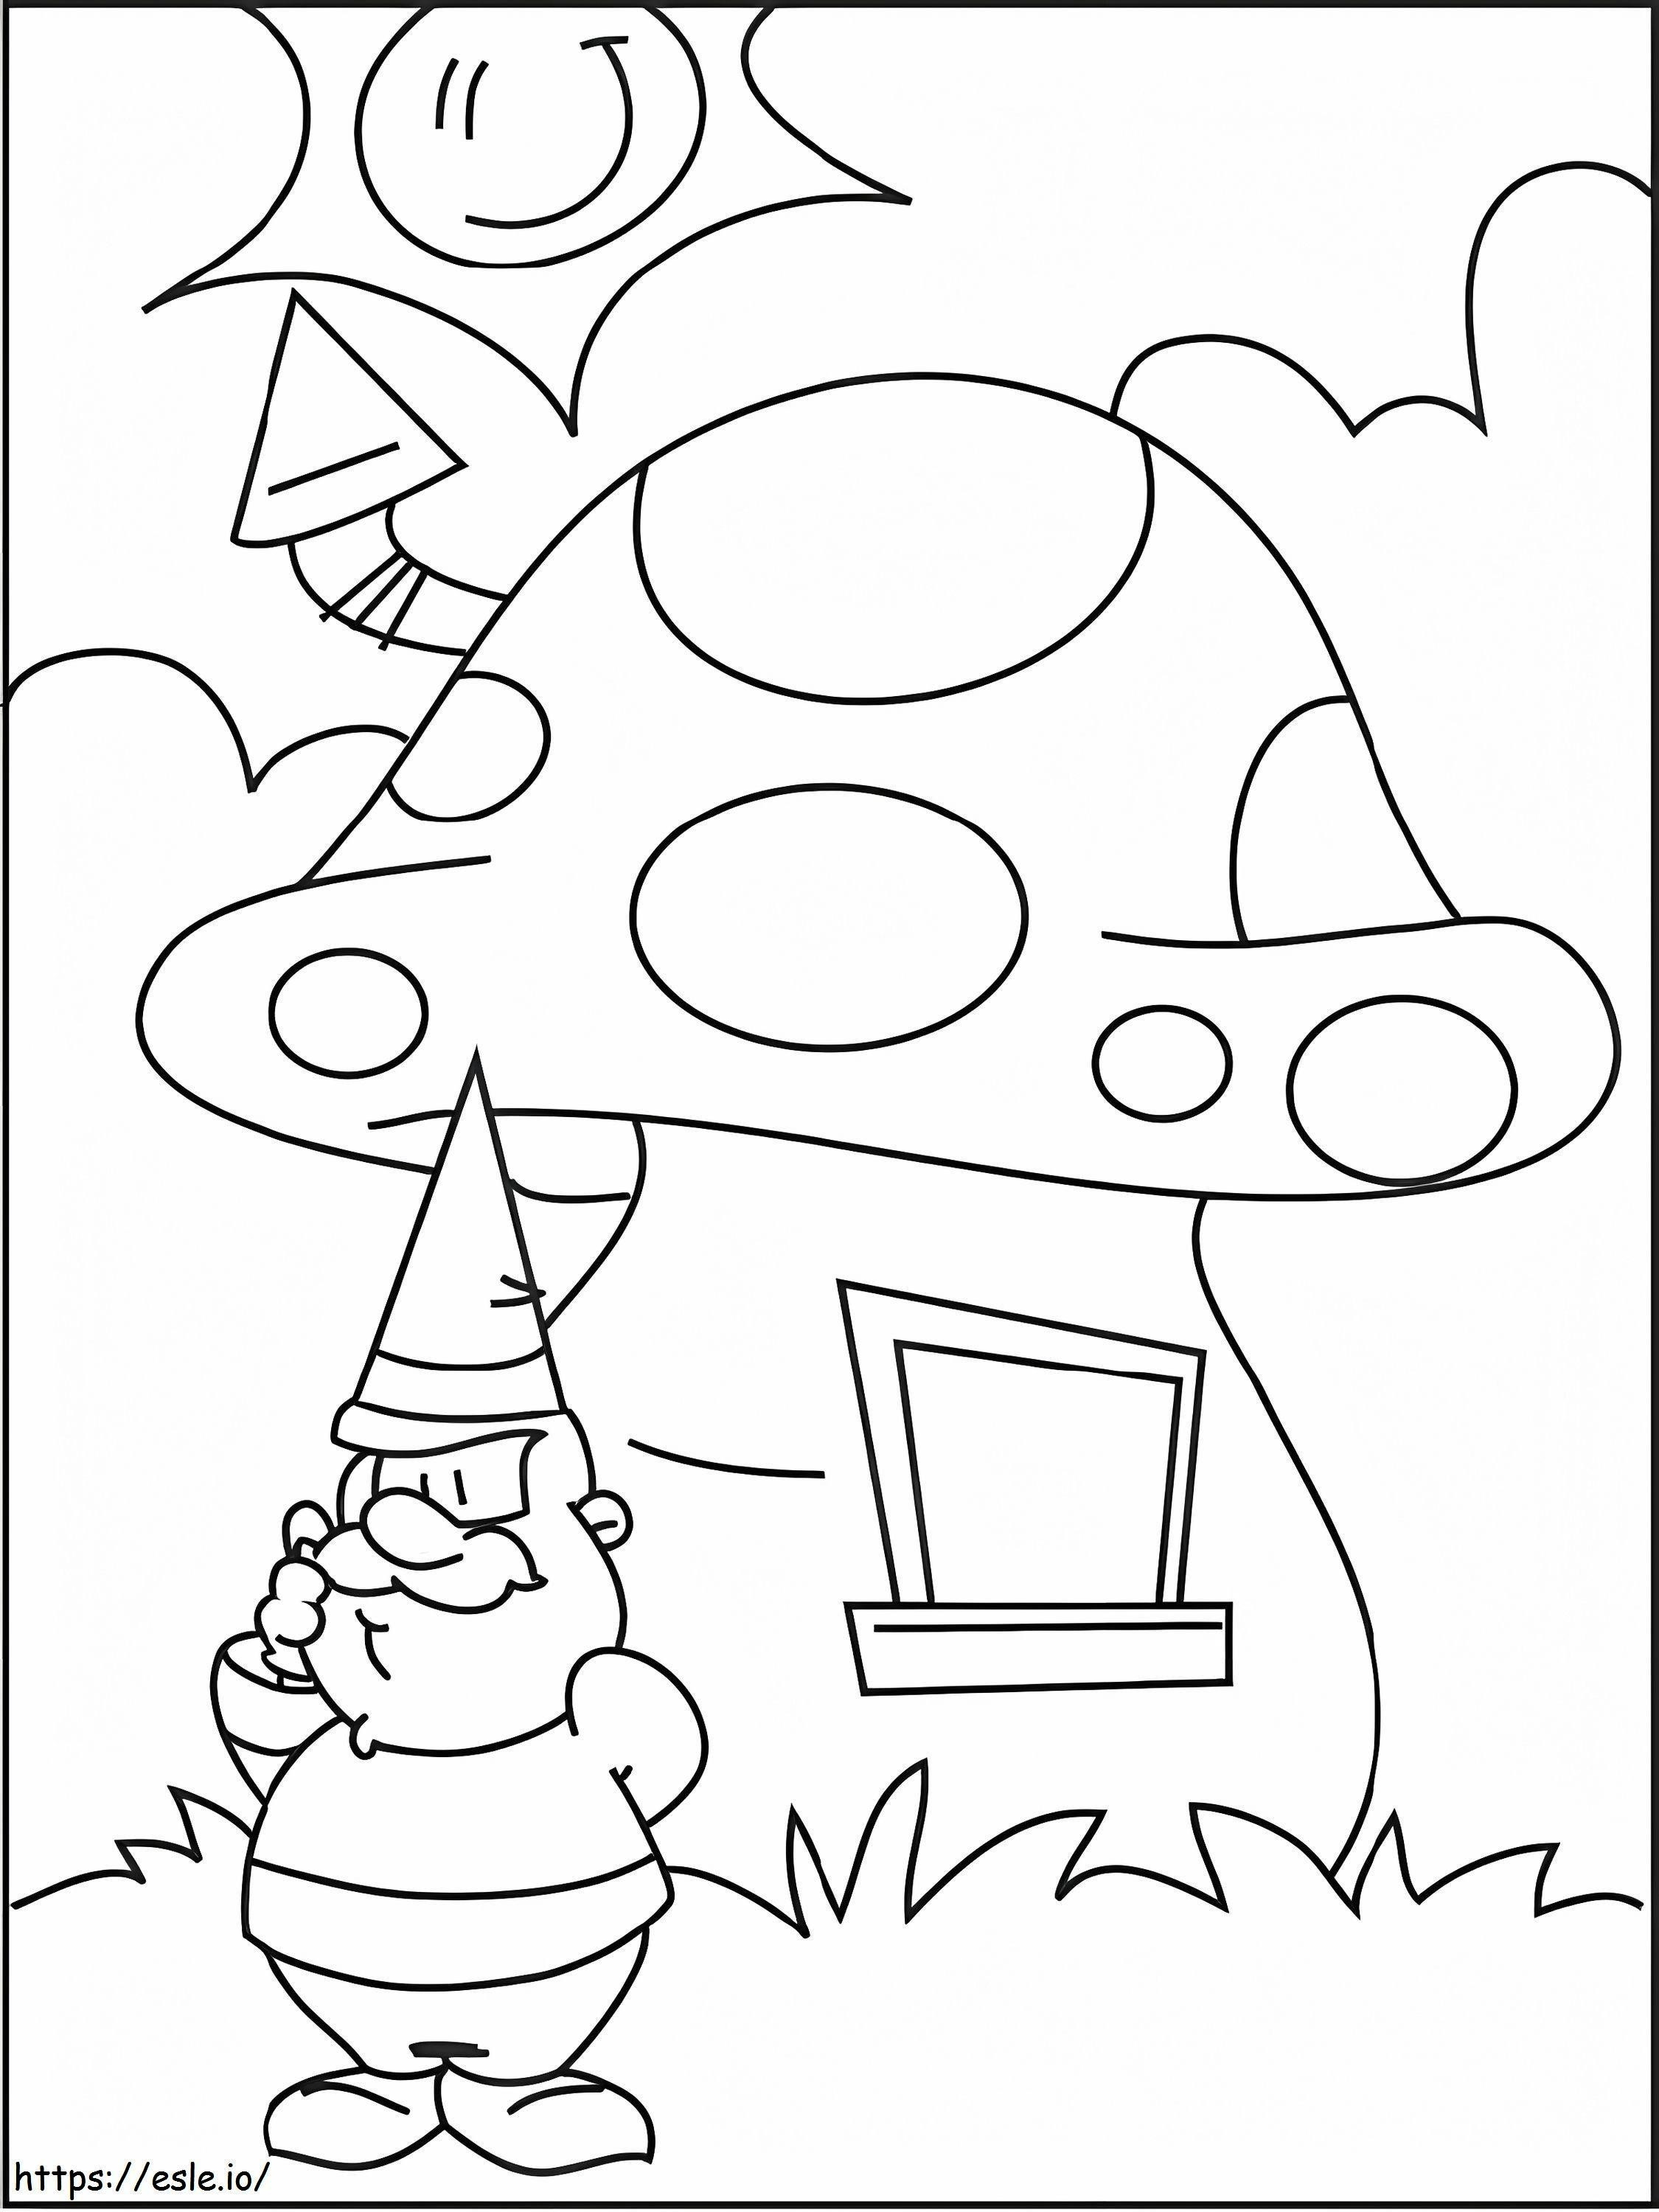 David The Gnome 6 coloring page